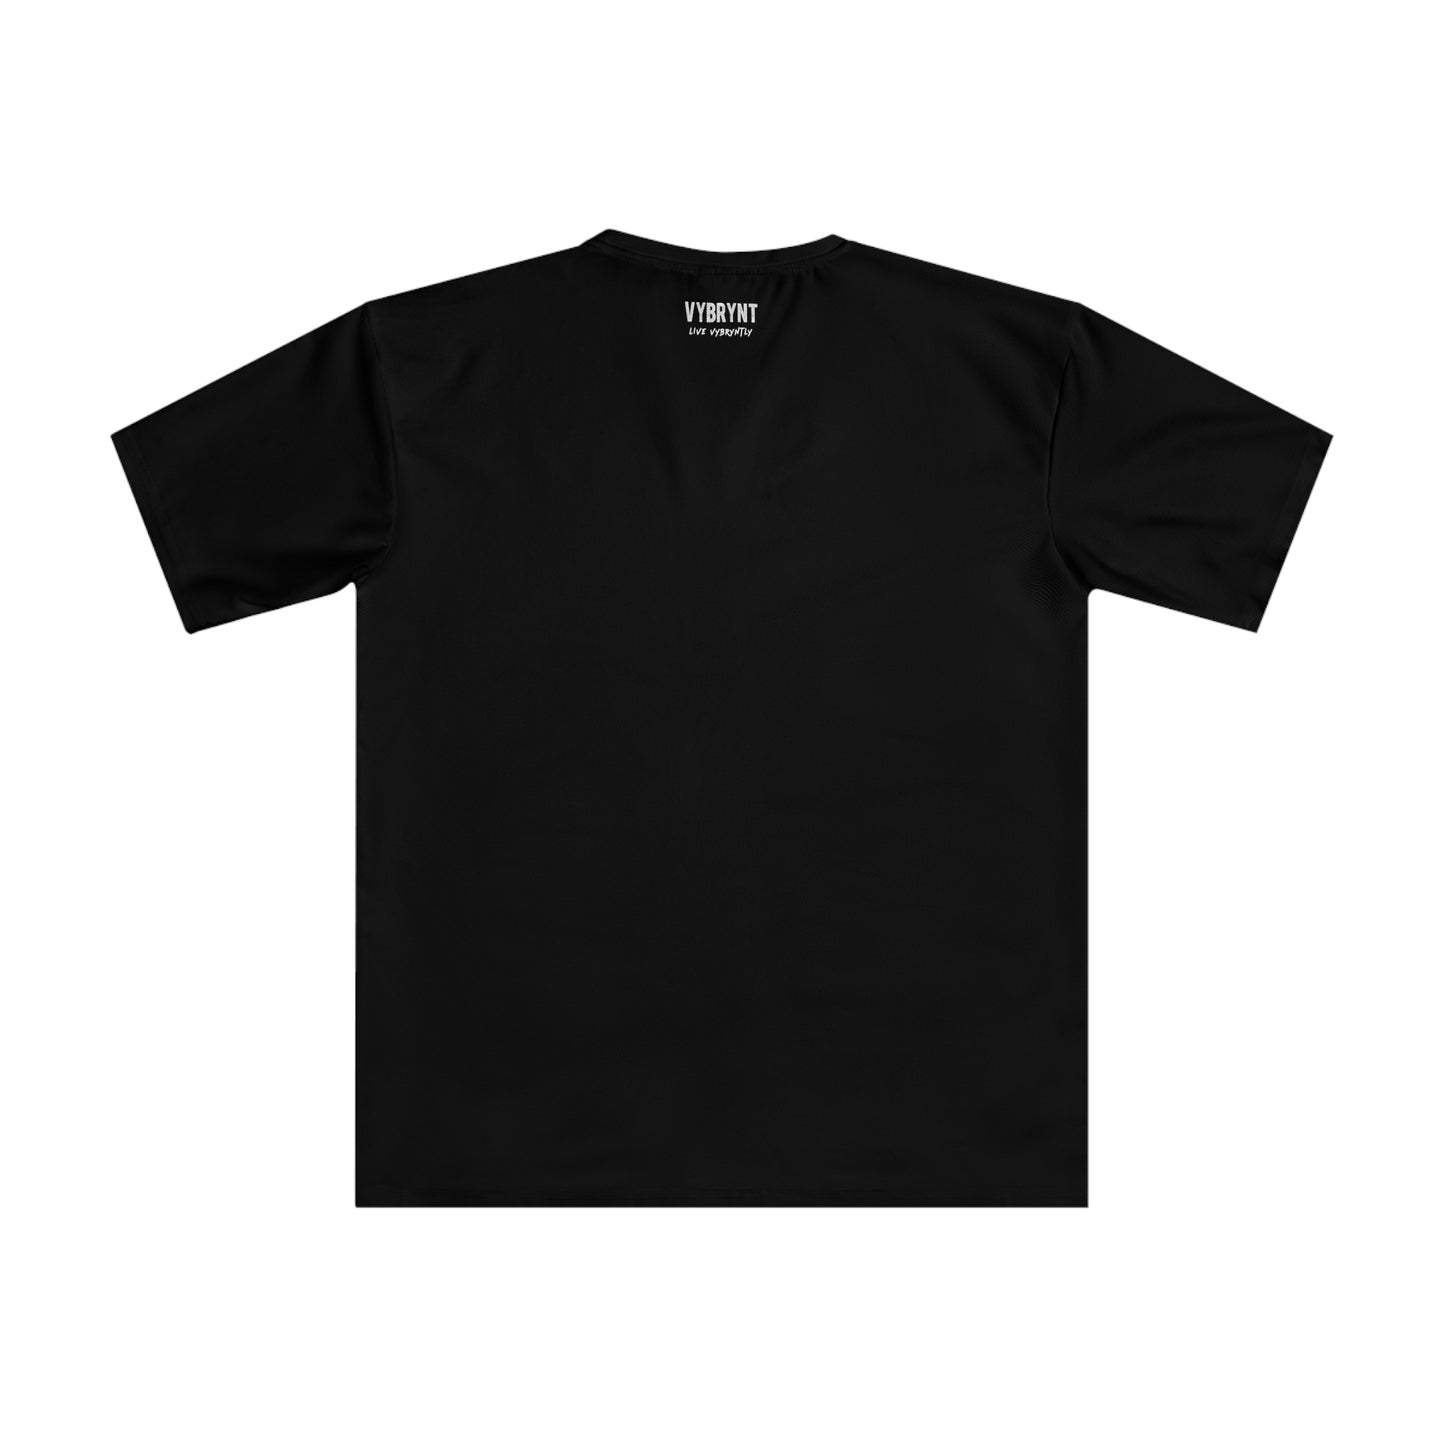 135th St Station Men's Black T-shirt